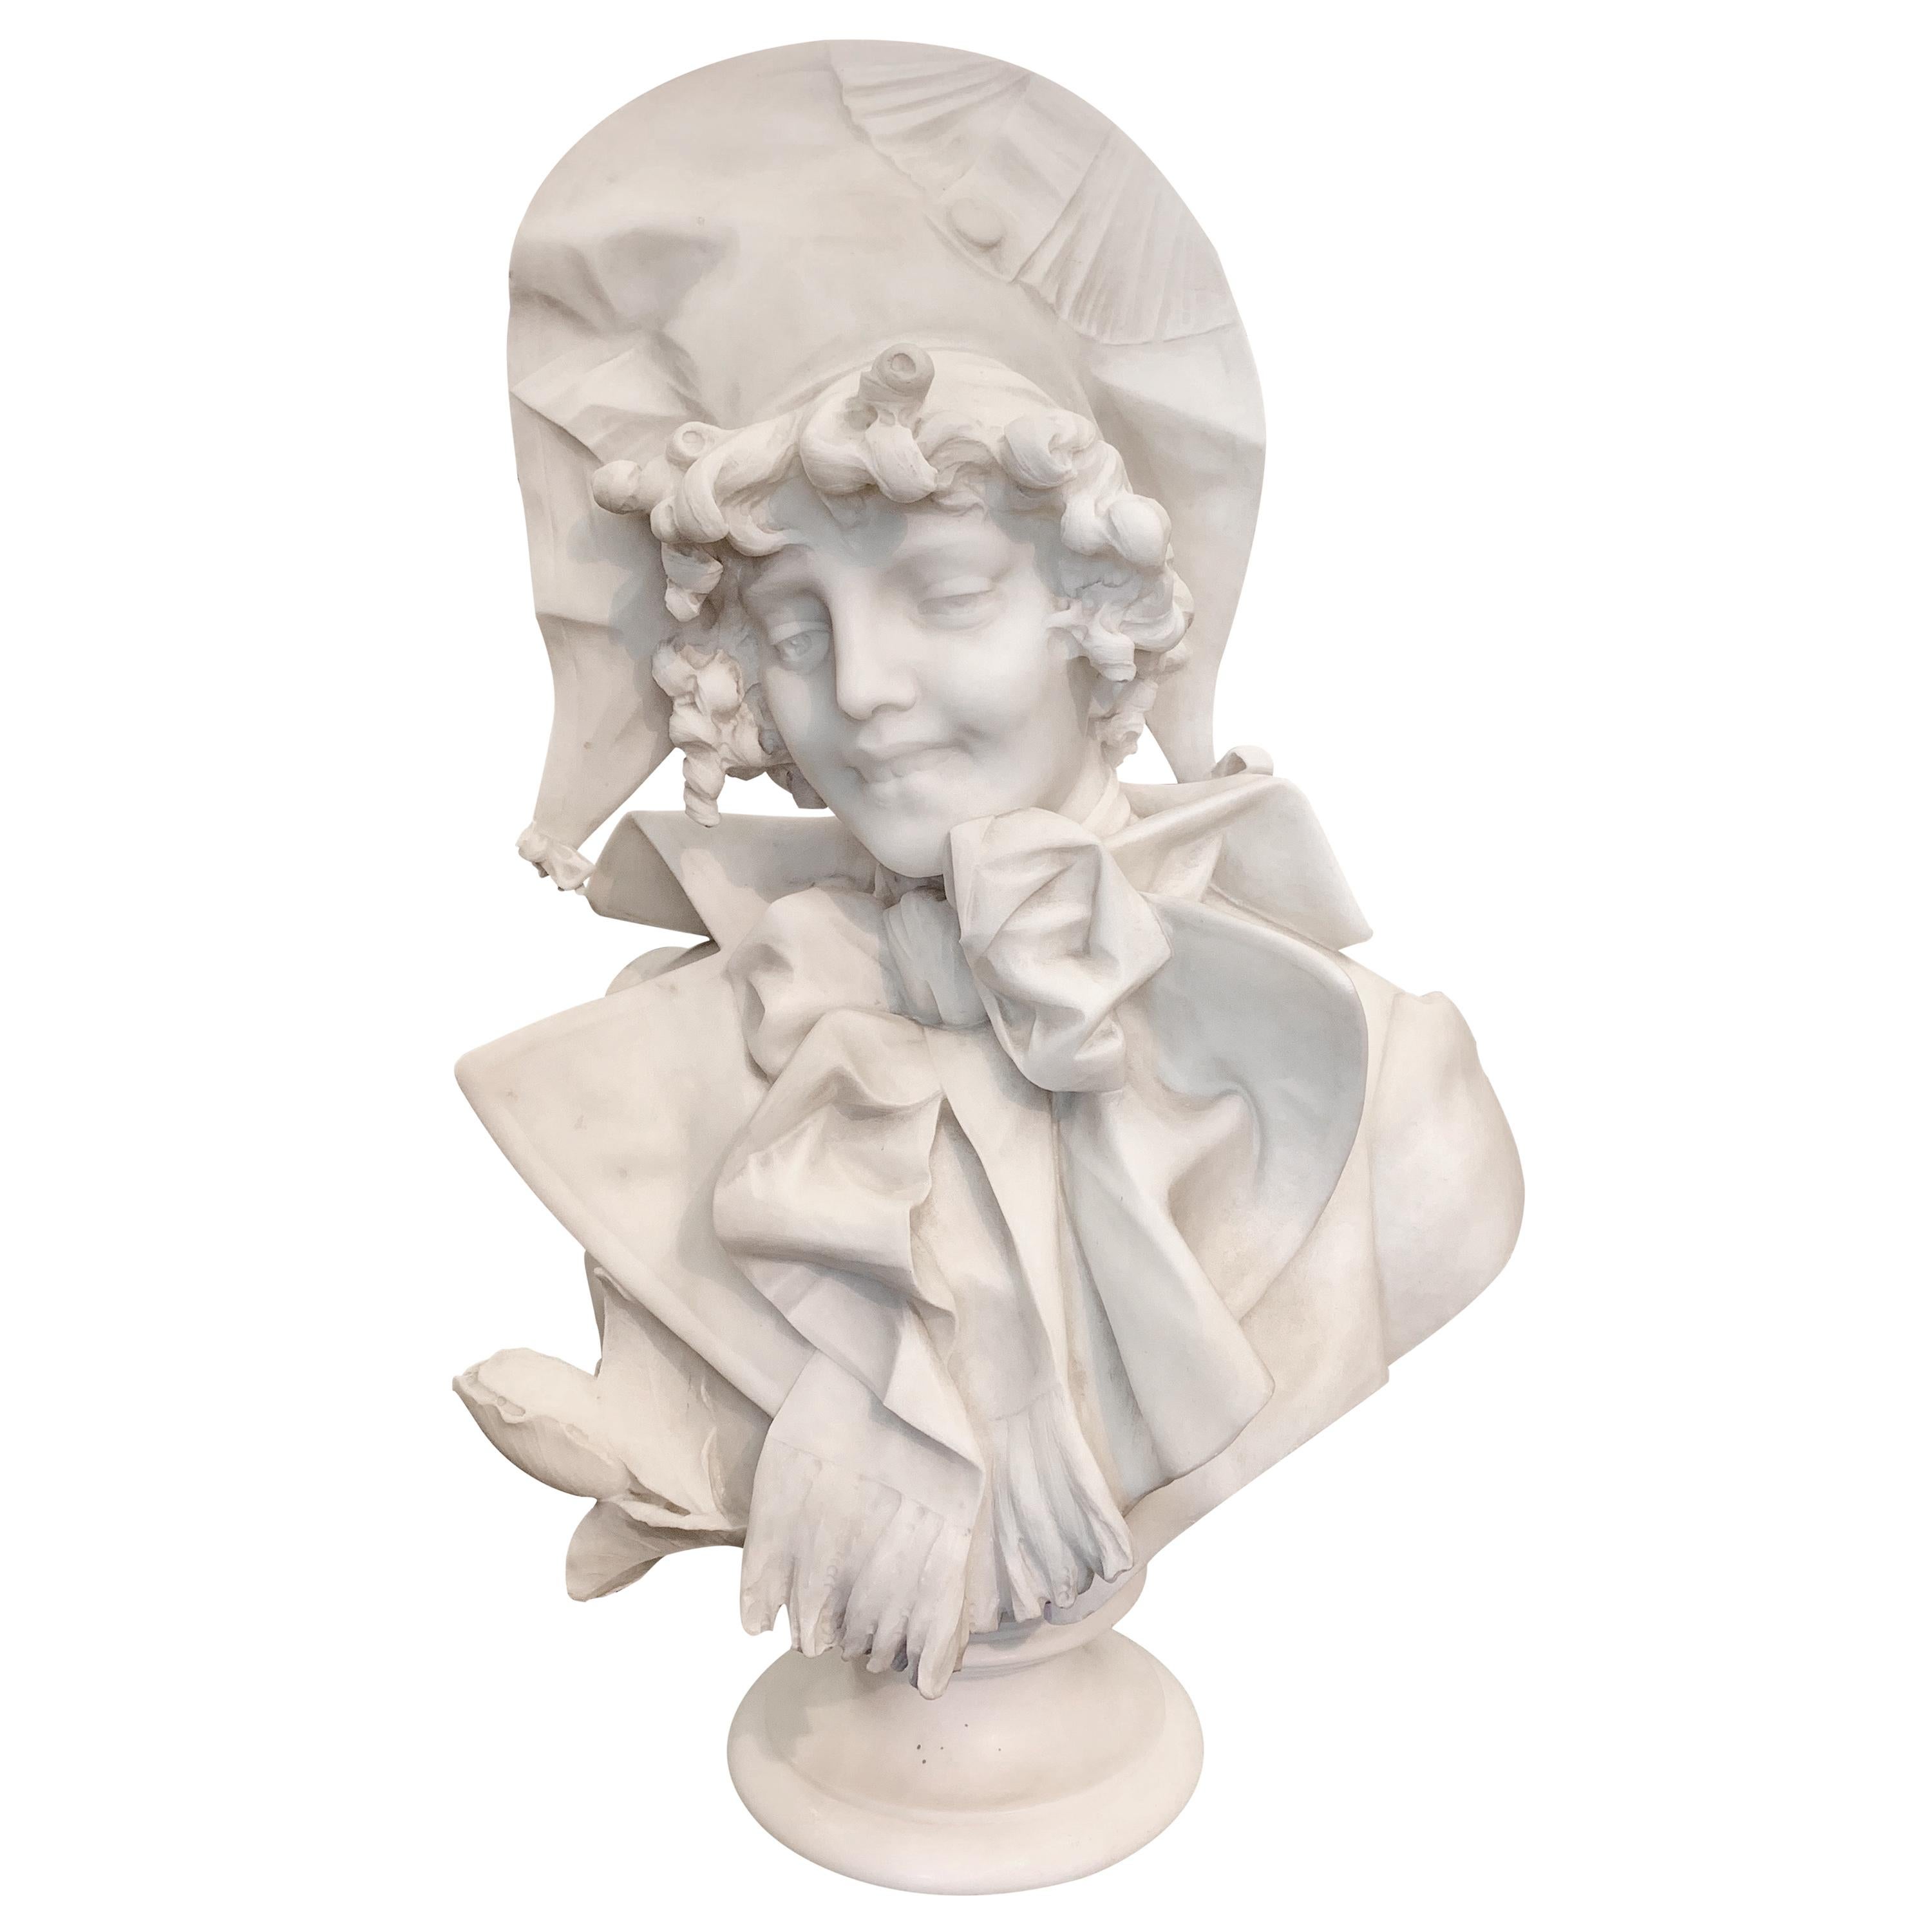 Antique Italian marble sculpture of a smiling lady by Ferdinando Vichi